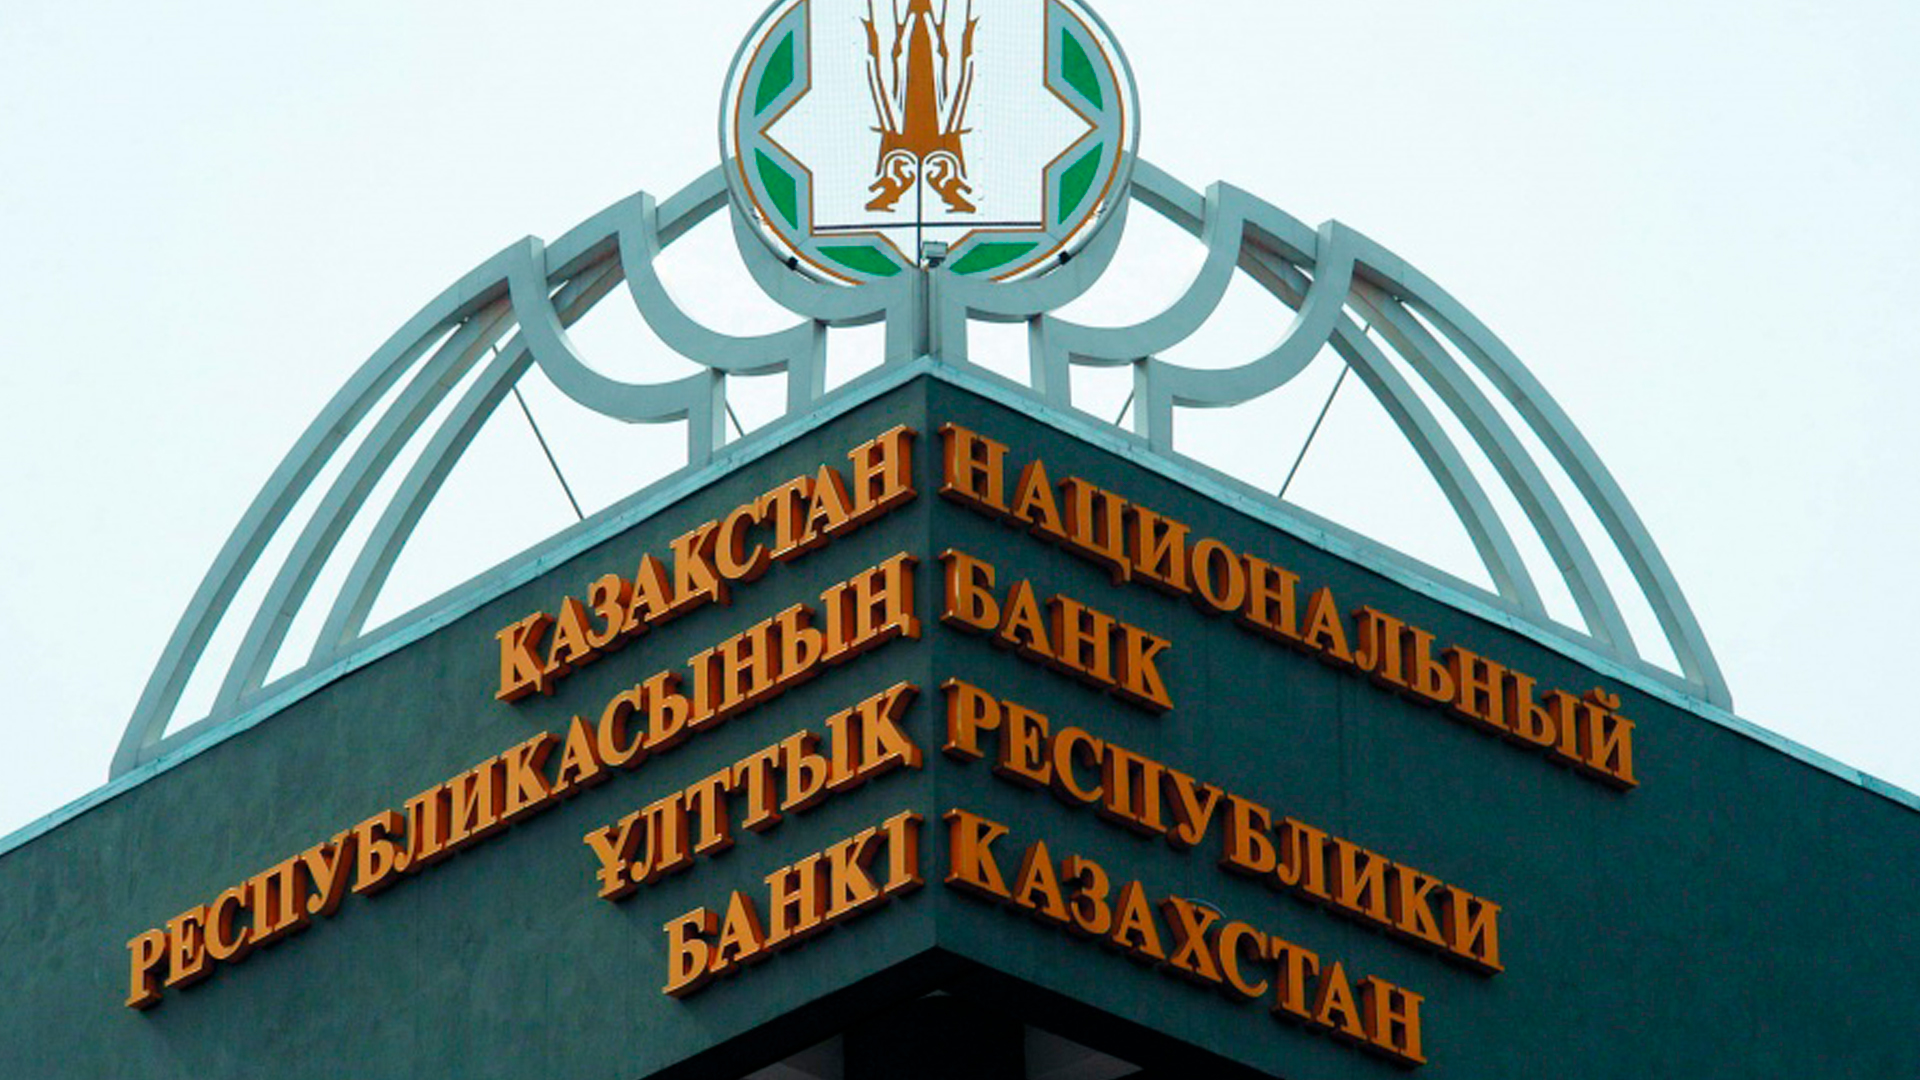 Сайт нац банк казахстан. Национальный банк Республики Казахстан. Сайт национального банка Казахстана. Нацбанк Казахстана логотип. Национальный банк Республики Казахстан фото.